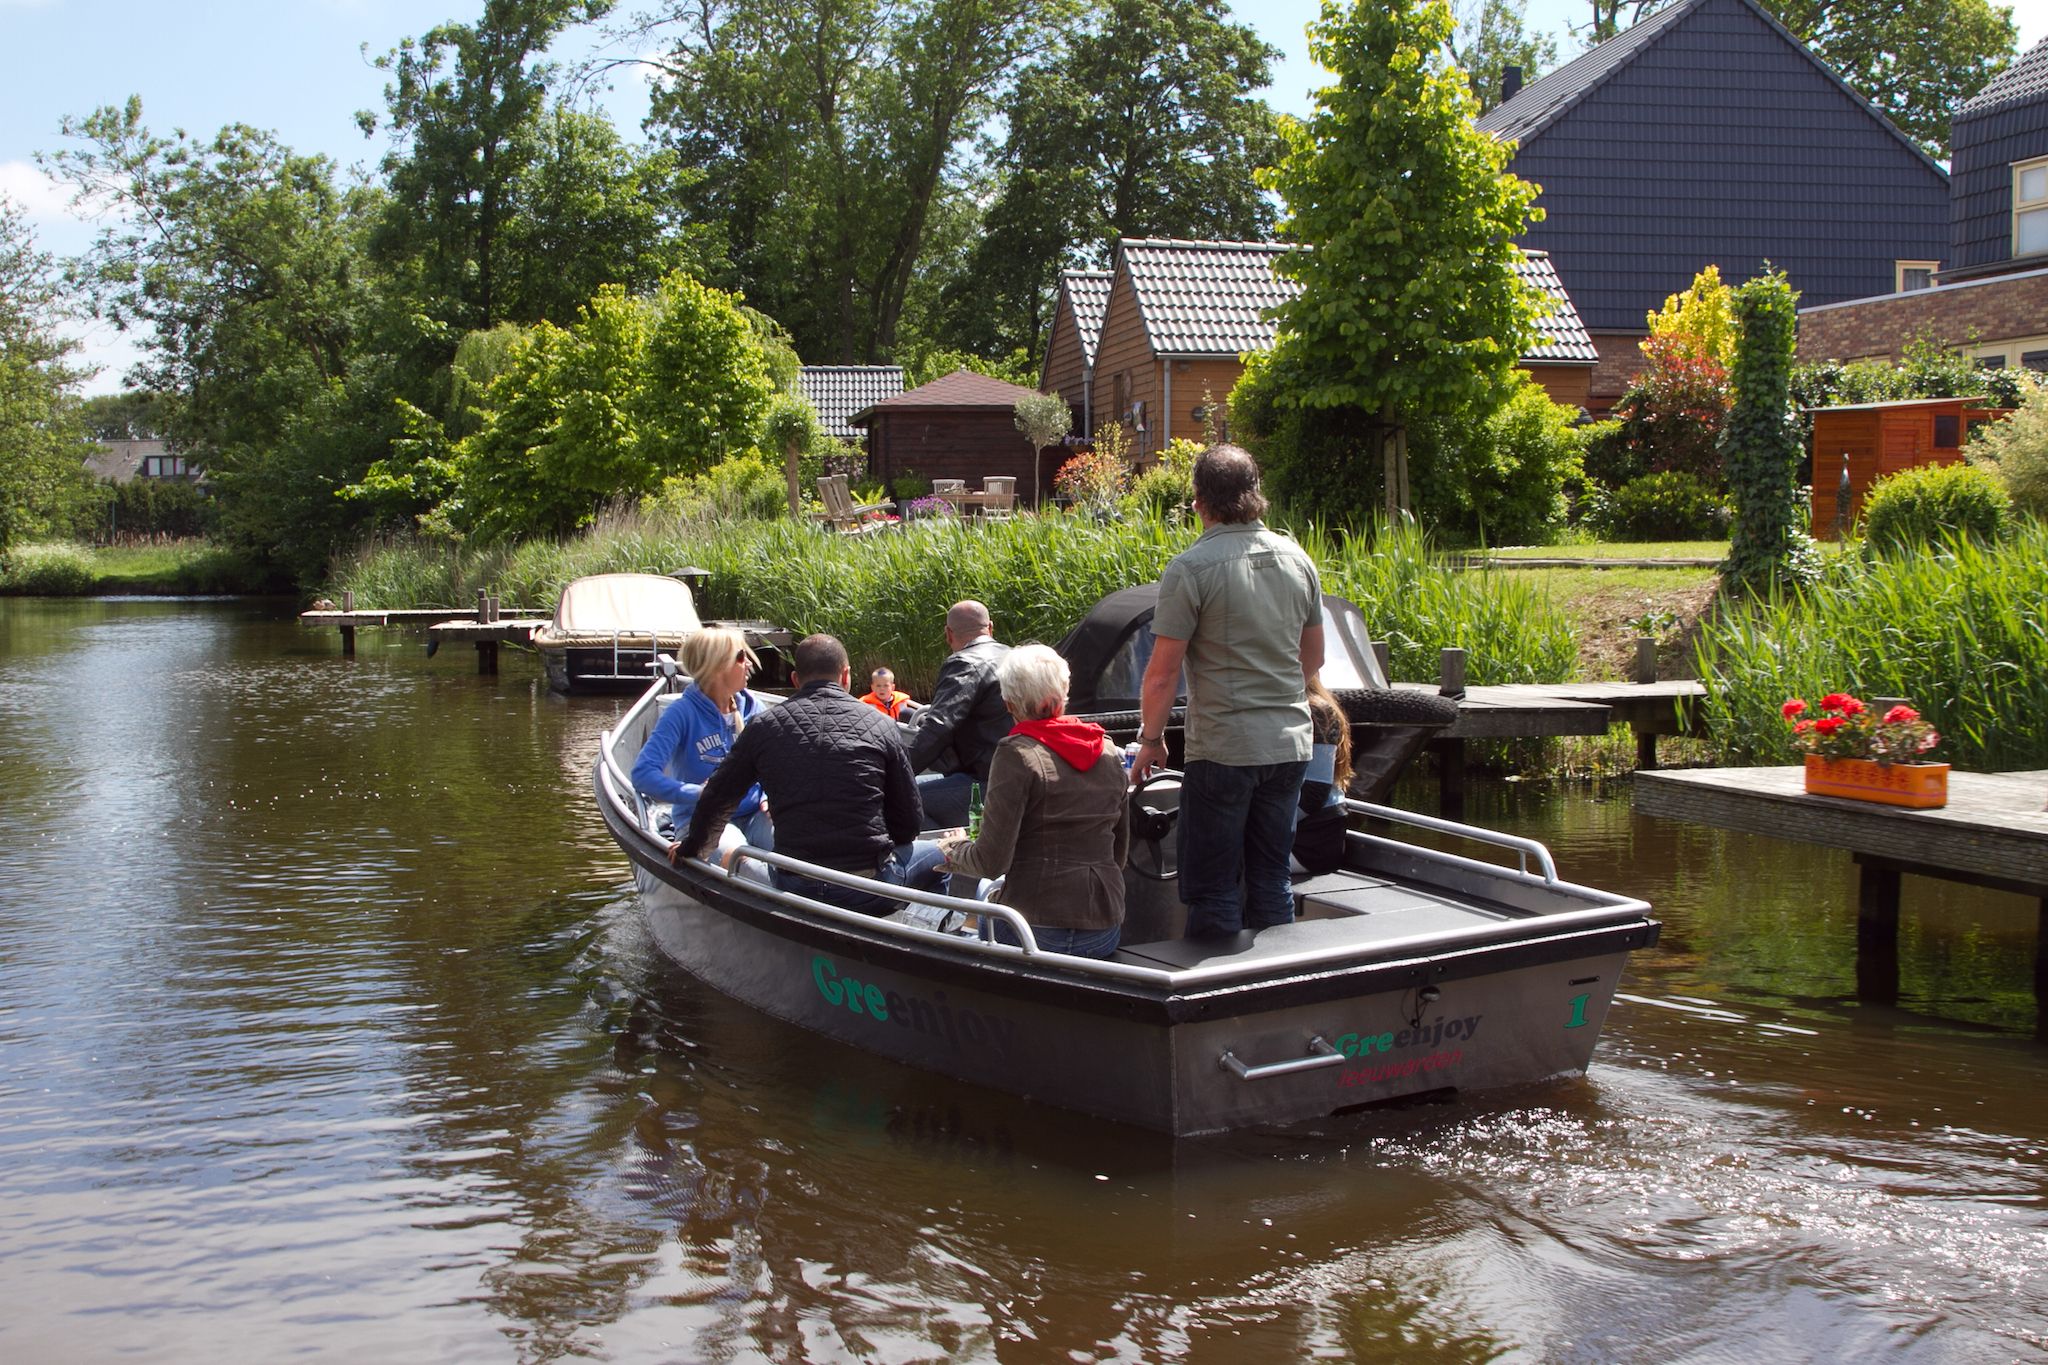 Enjoy the canals of Leeuwarden